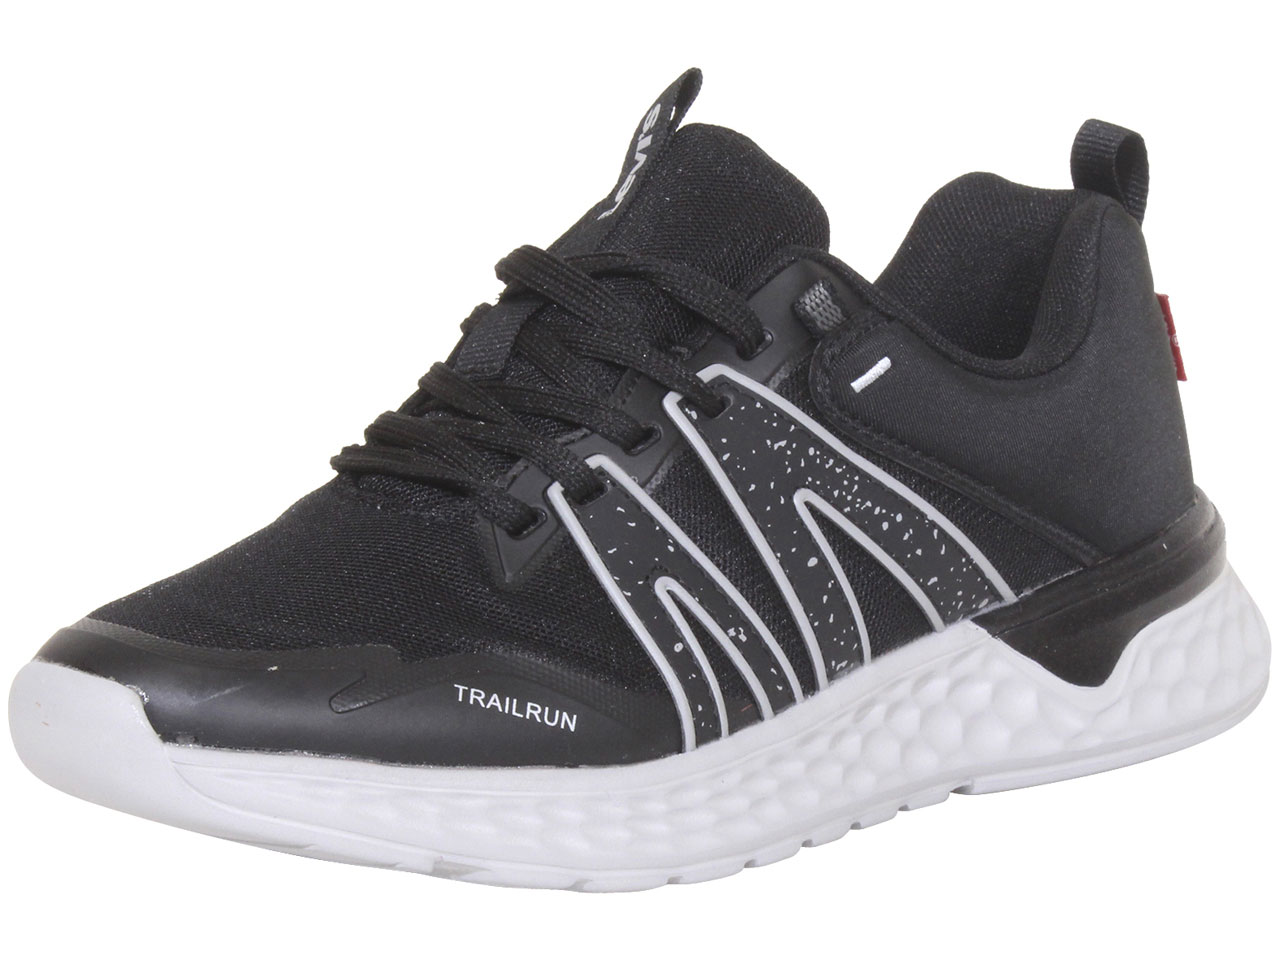 Levis Men's Newbury-Trail Sneakers Low-Top Running Shoes Black/Silver Sz:   